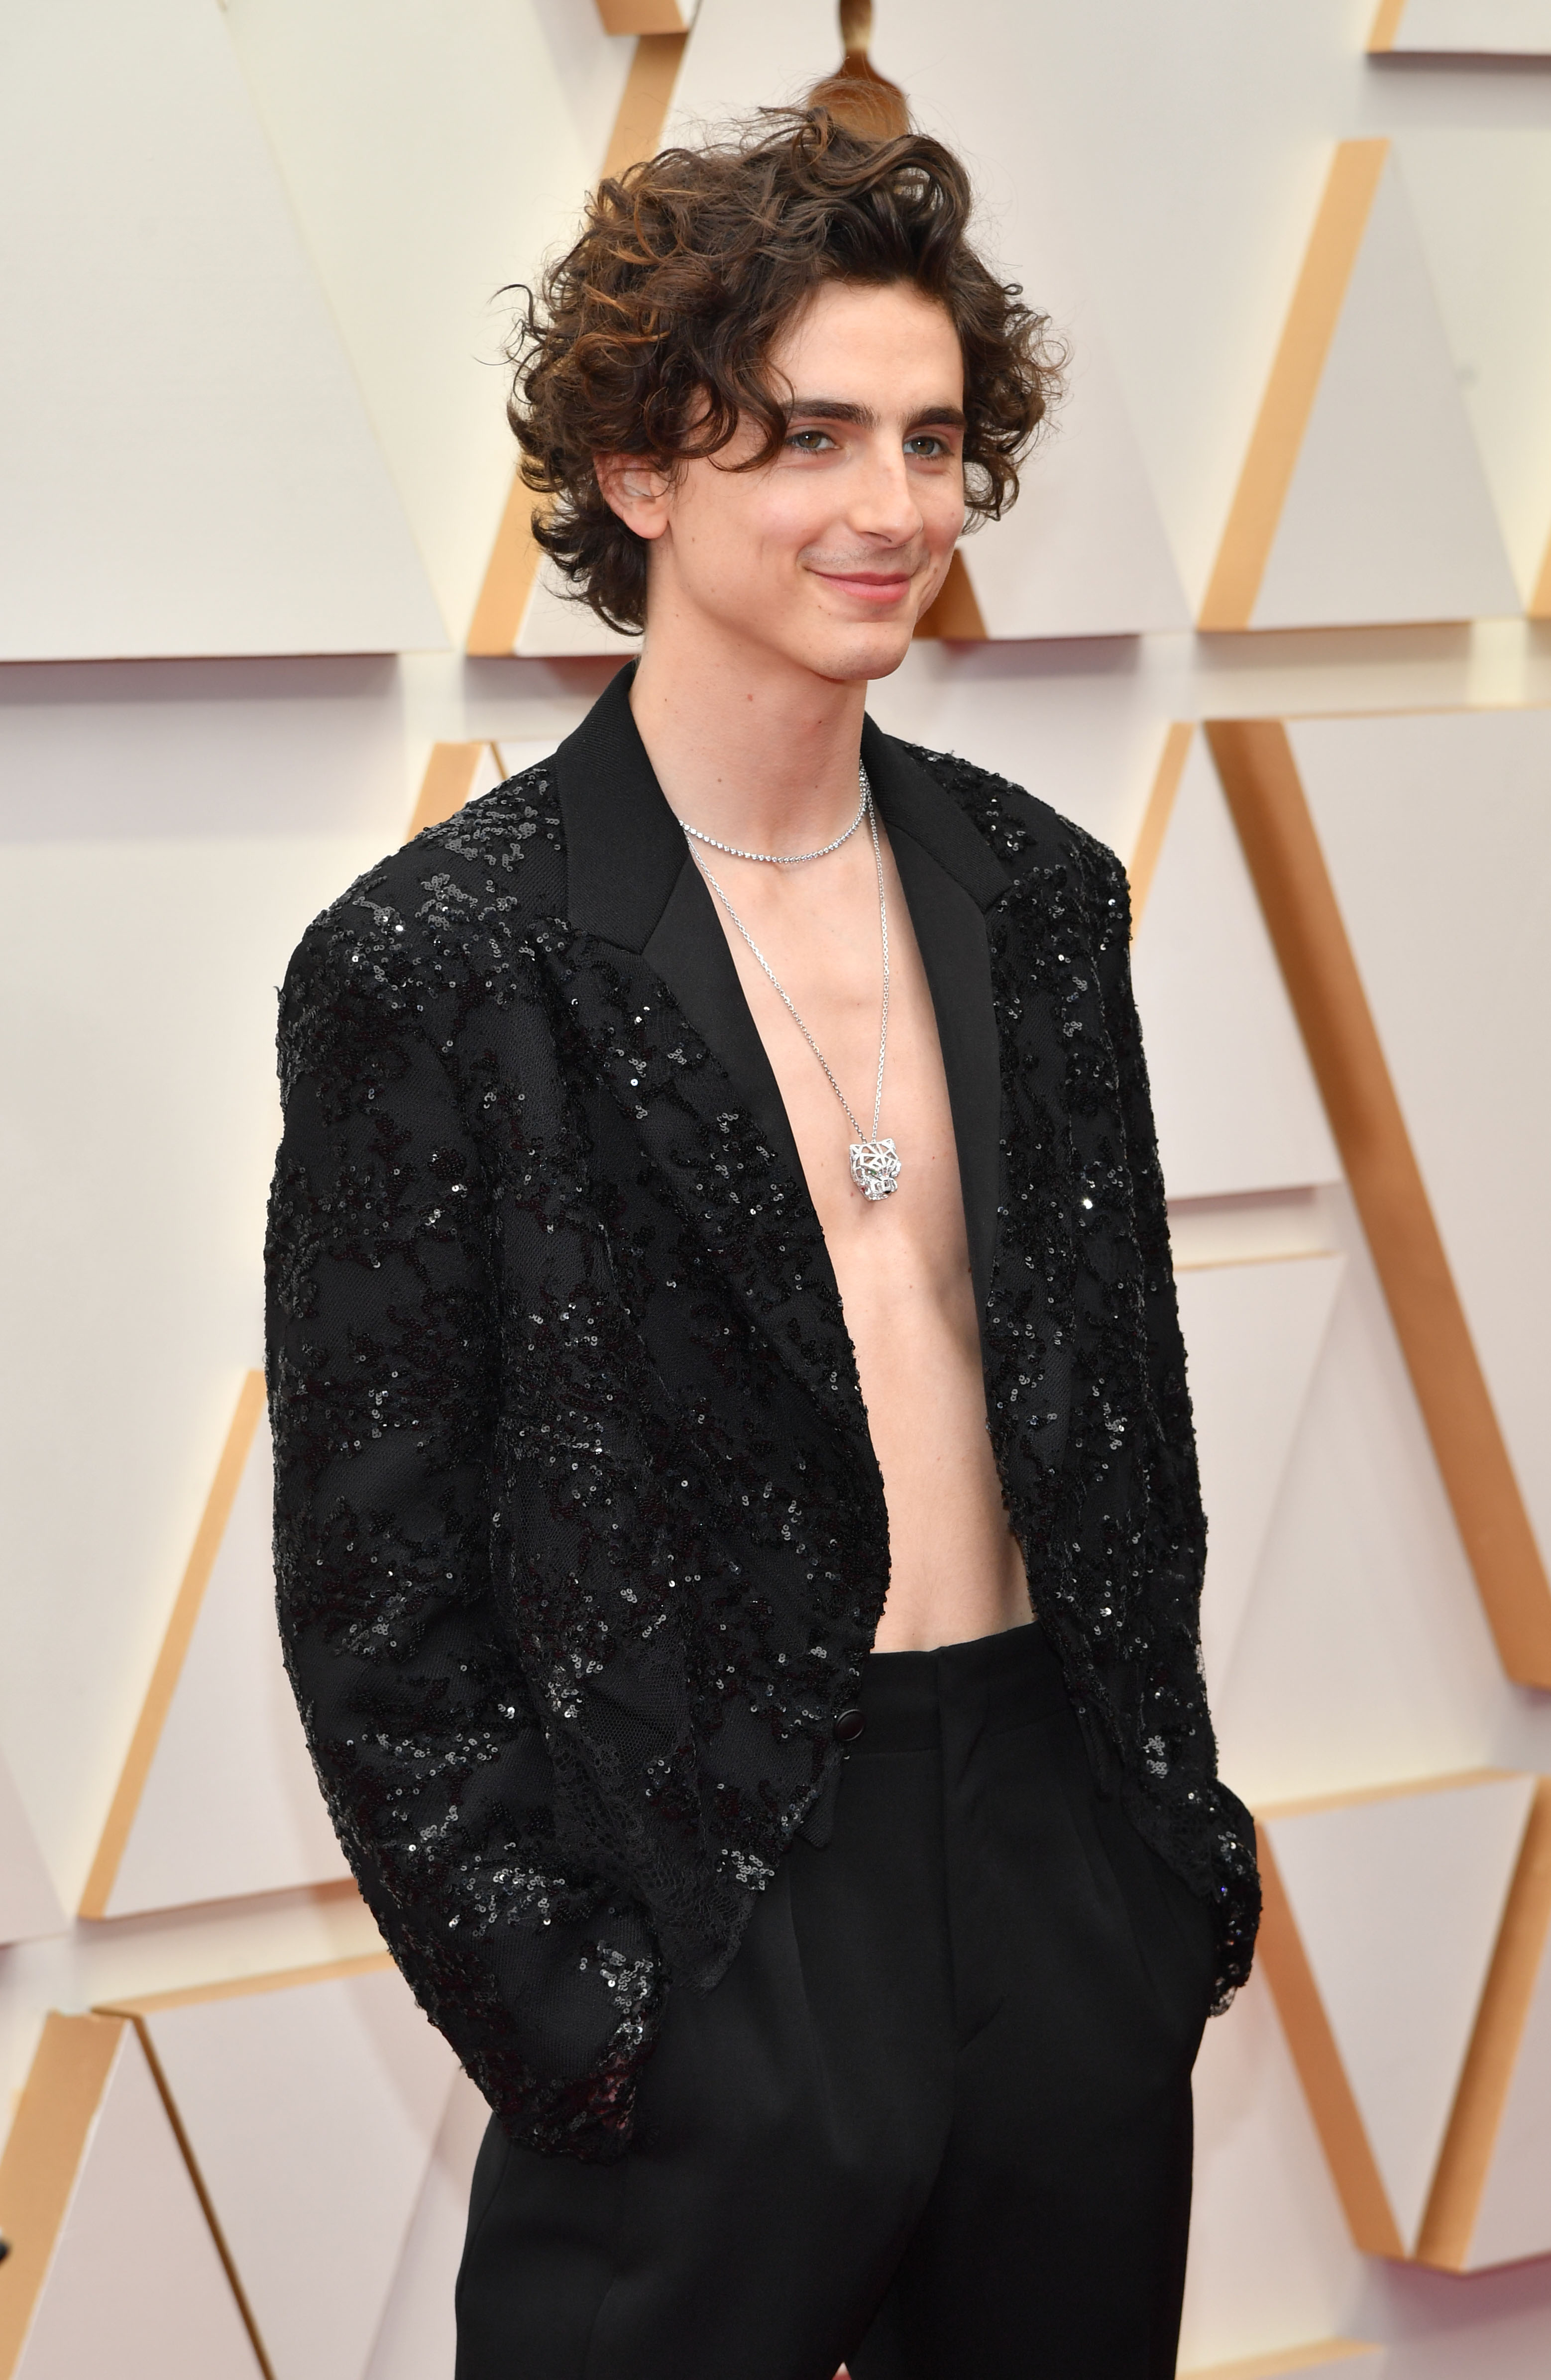 Timothee Chalamet Goes Shirtless at Oscars 2022: Photo 4733996, 2022 Oscars,  Oscars, Timothee Chalamet Photos